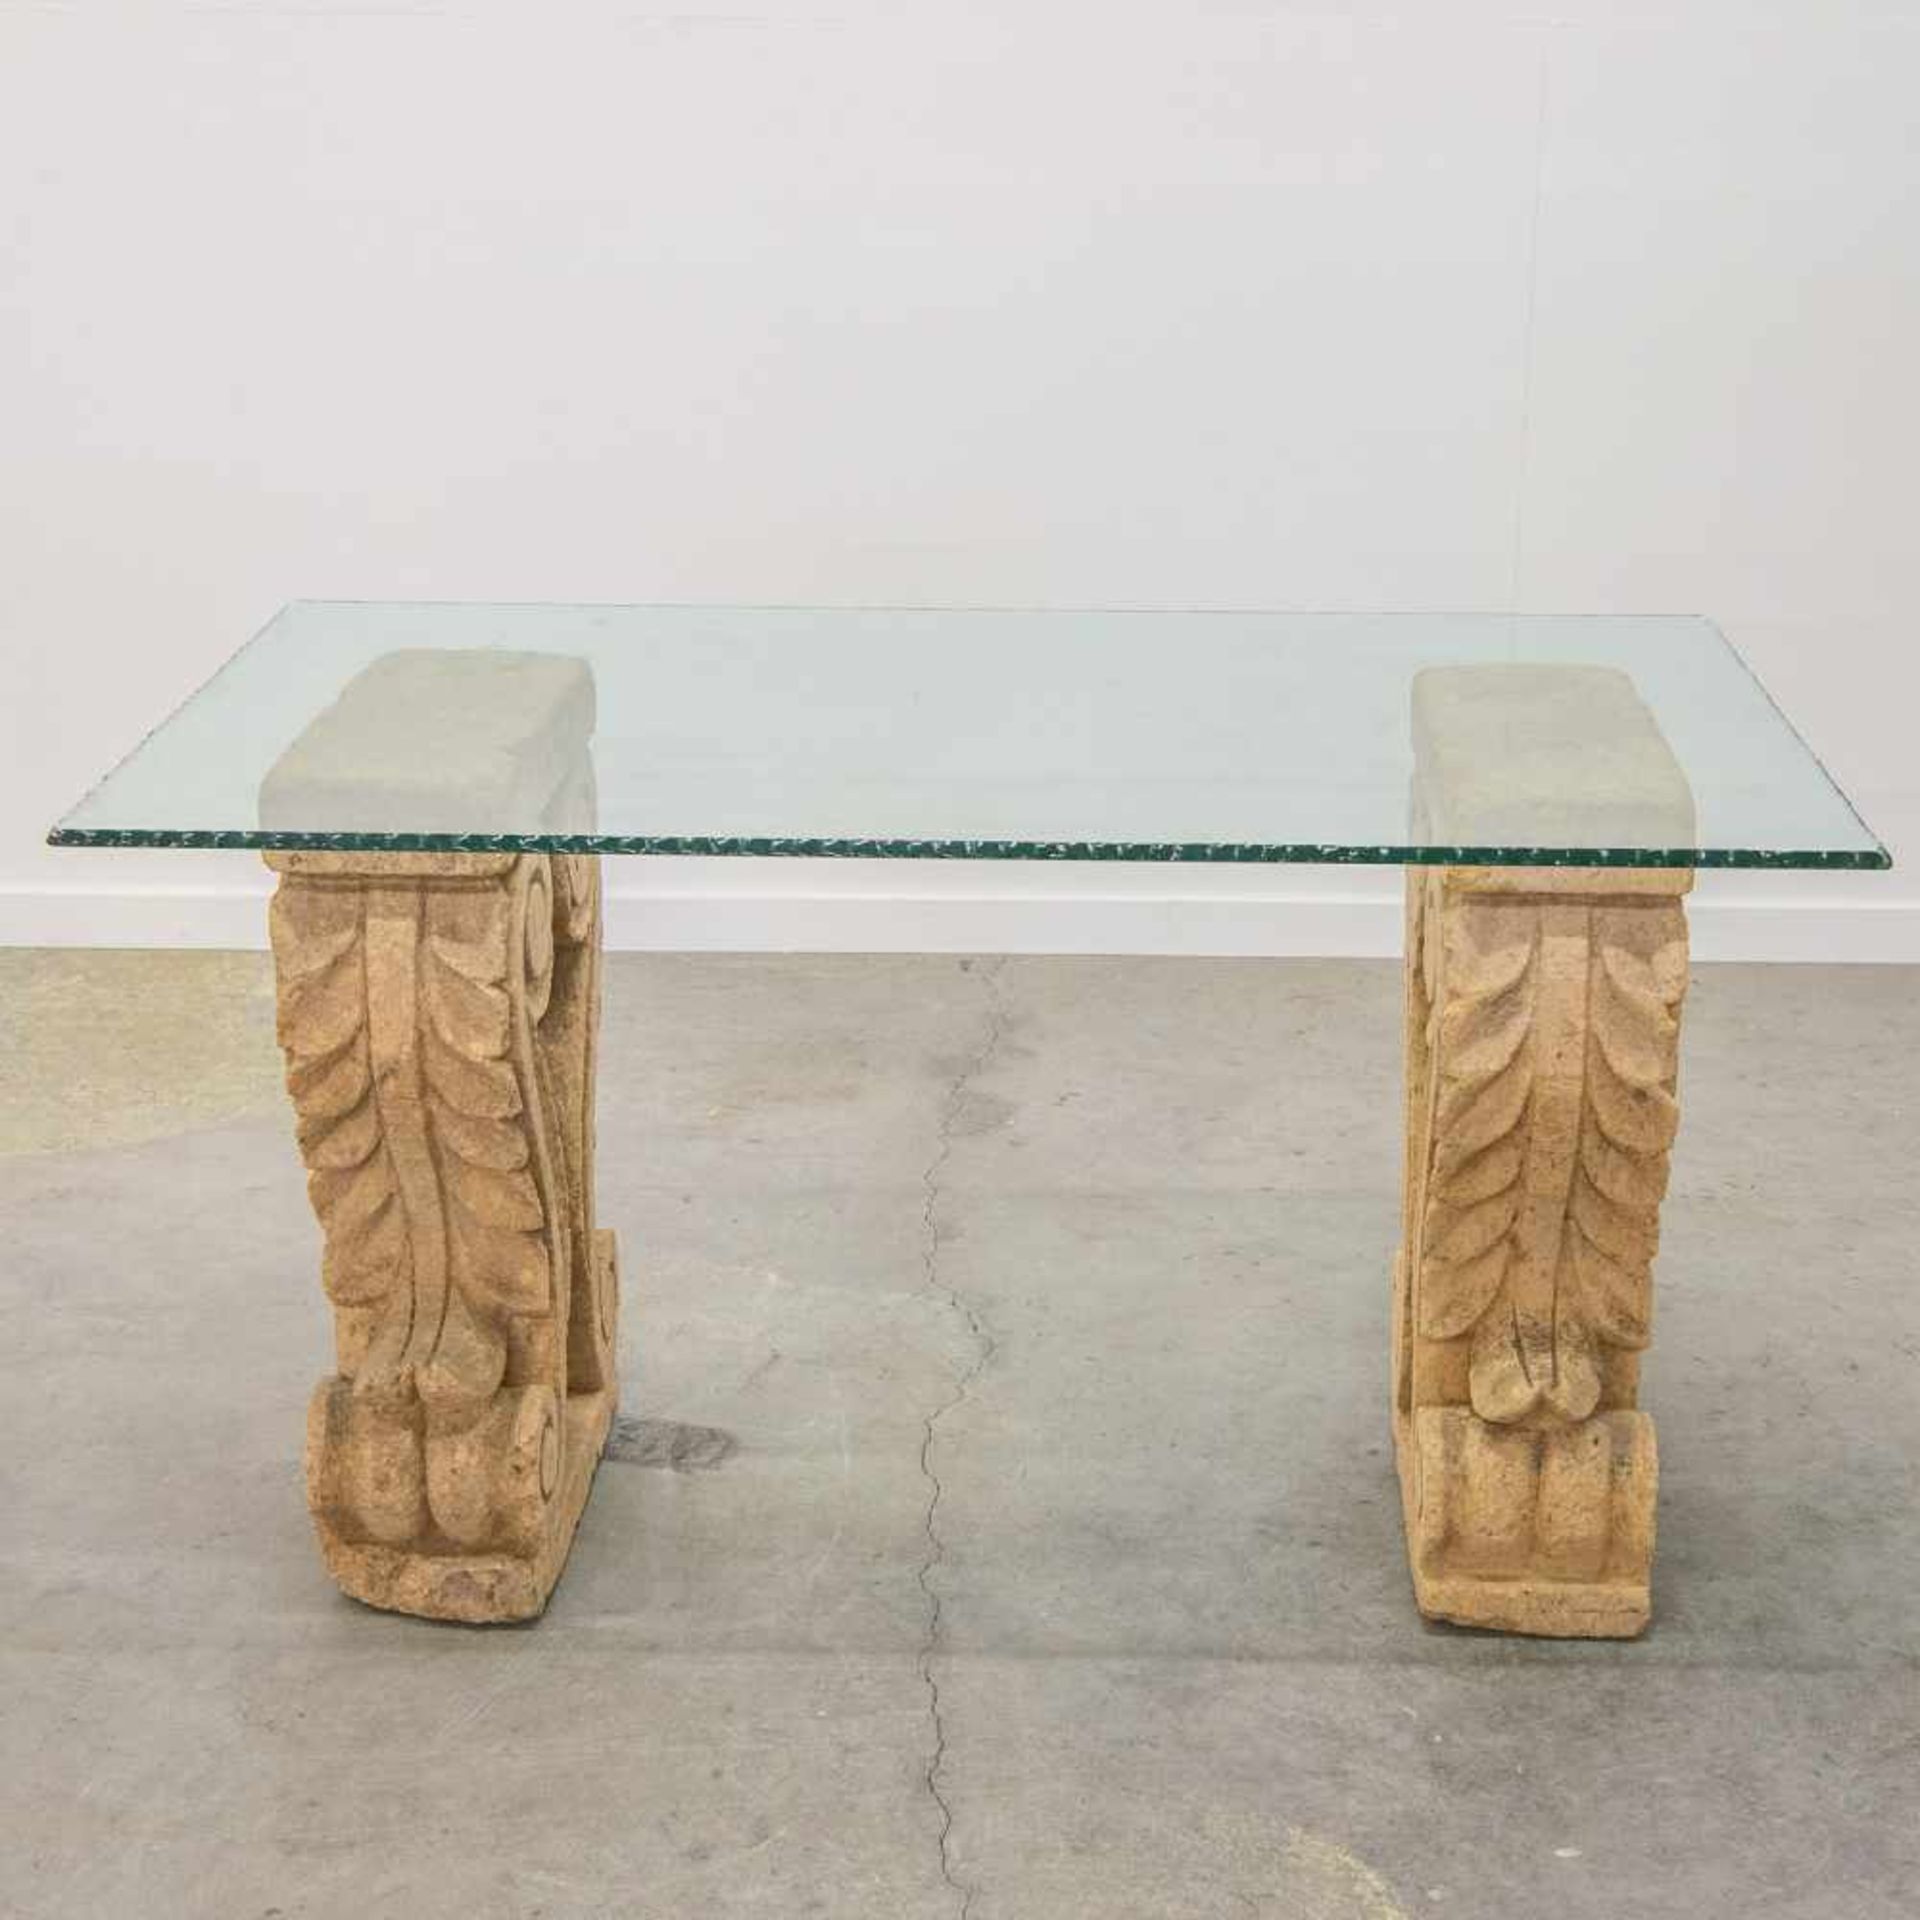 Glass and stone table Length: 140 cm , Width: 80 cm, Hight: 77 cm, Diameter: 0 cm